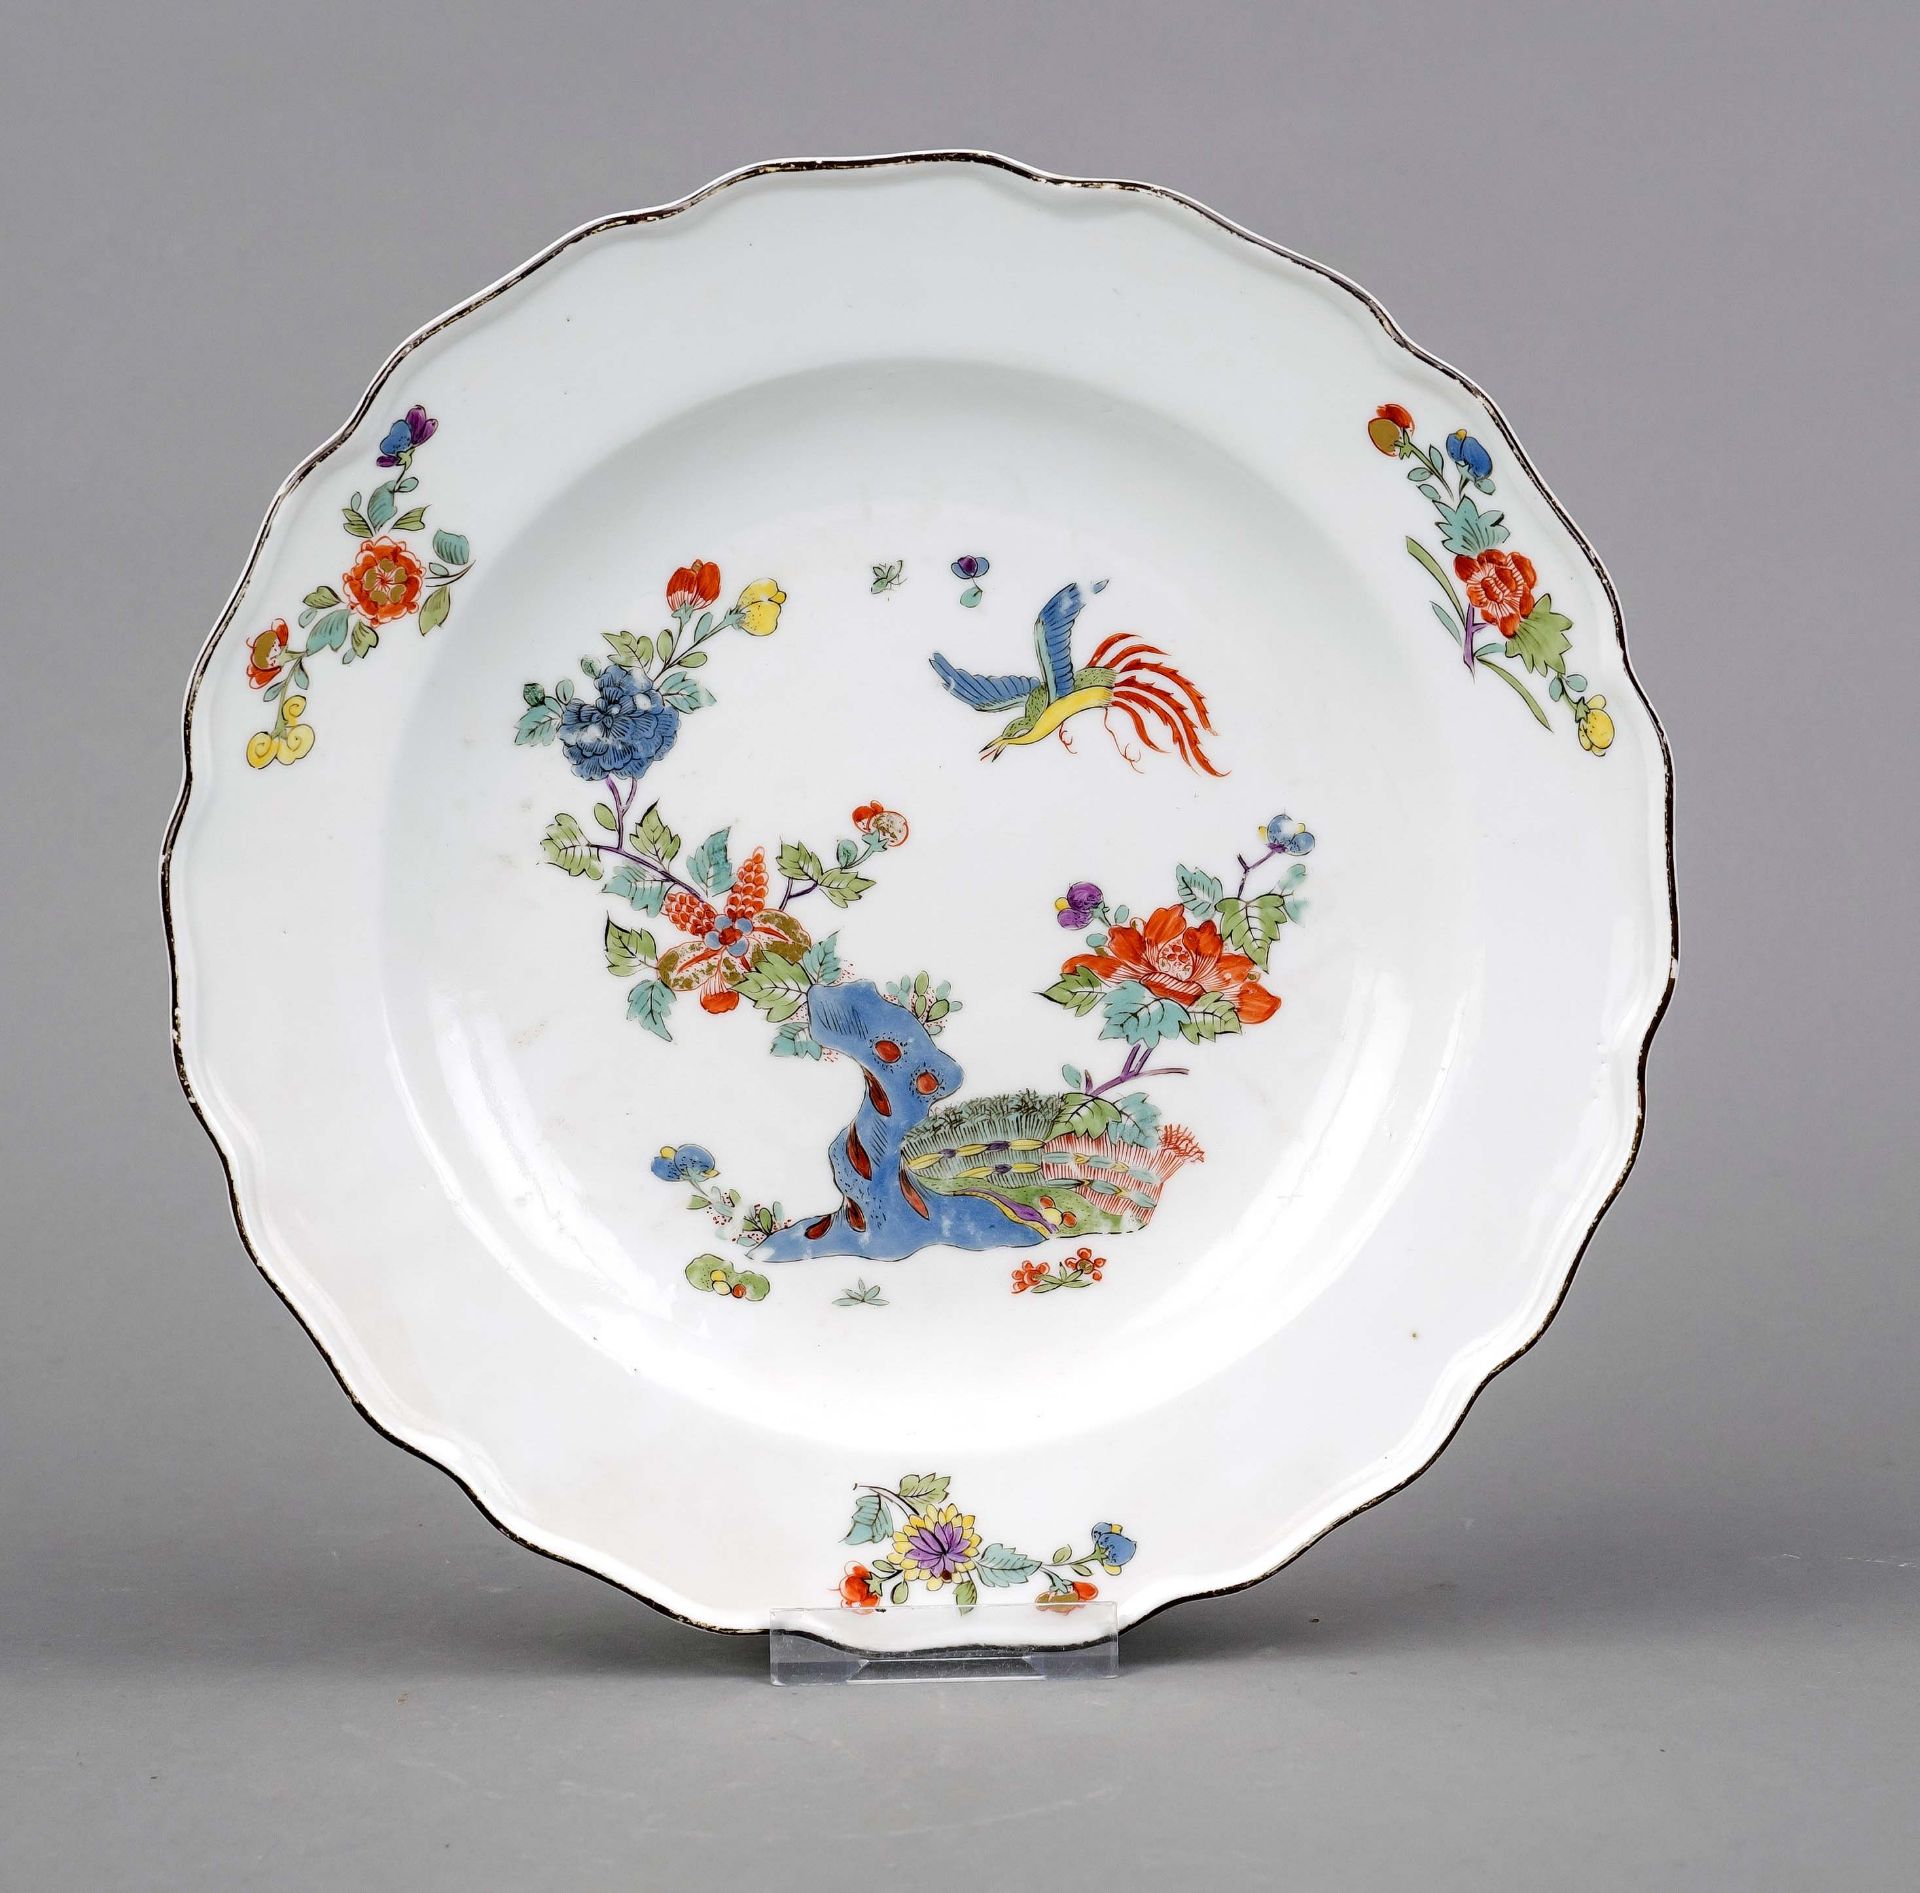 Plate, Meissen, c. 1750, wavy rim, polychrome Kakiemon painting in enamel colors, birds of